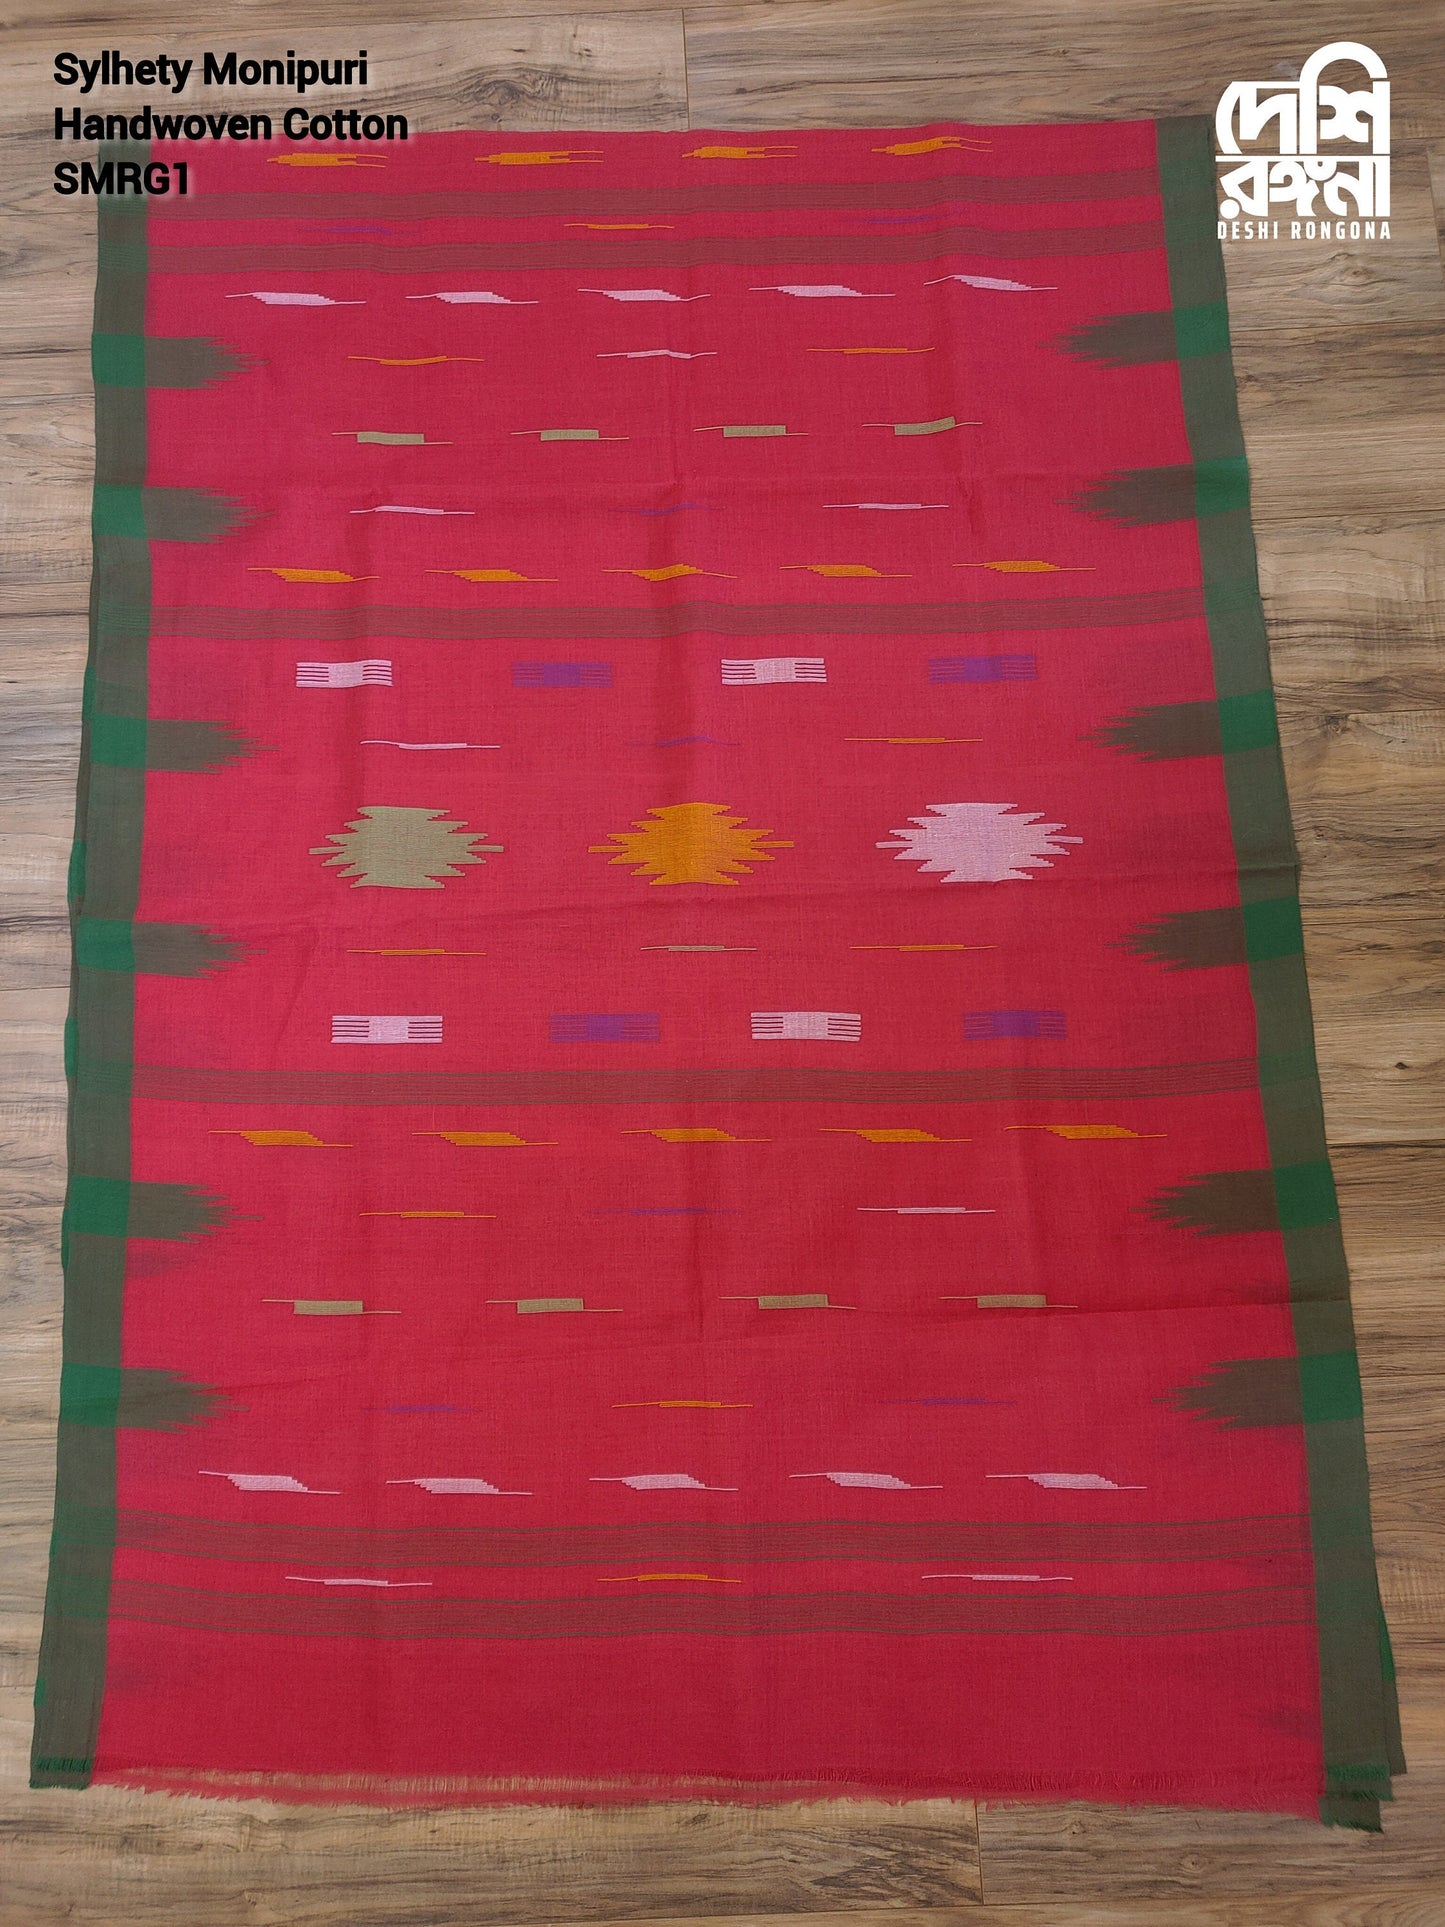 Sylheti Original Monipuri Handwoven Soft Cotton Saree, Pinkish Red with Green Woven Border, Bangladeshi, Traditional Comfortable Saree